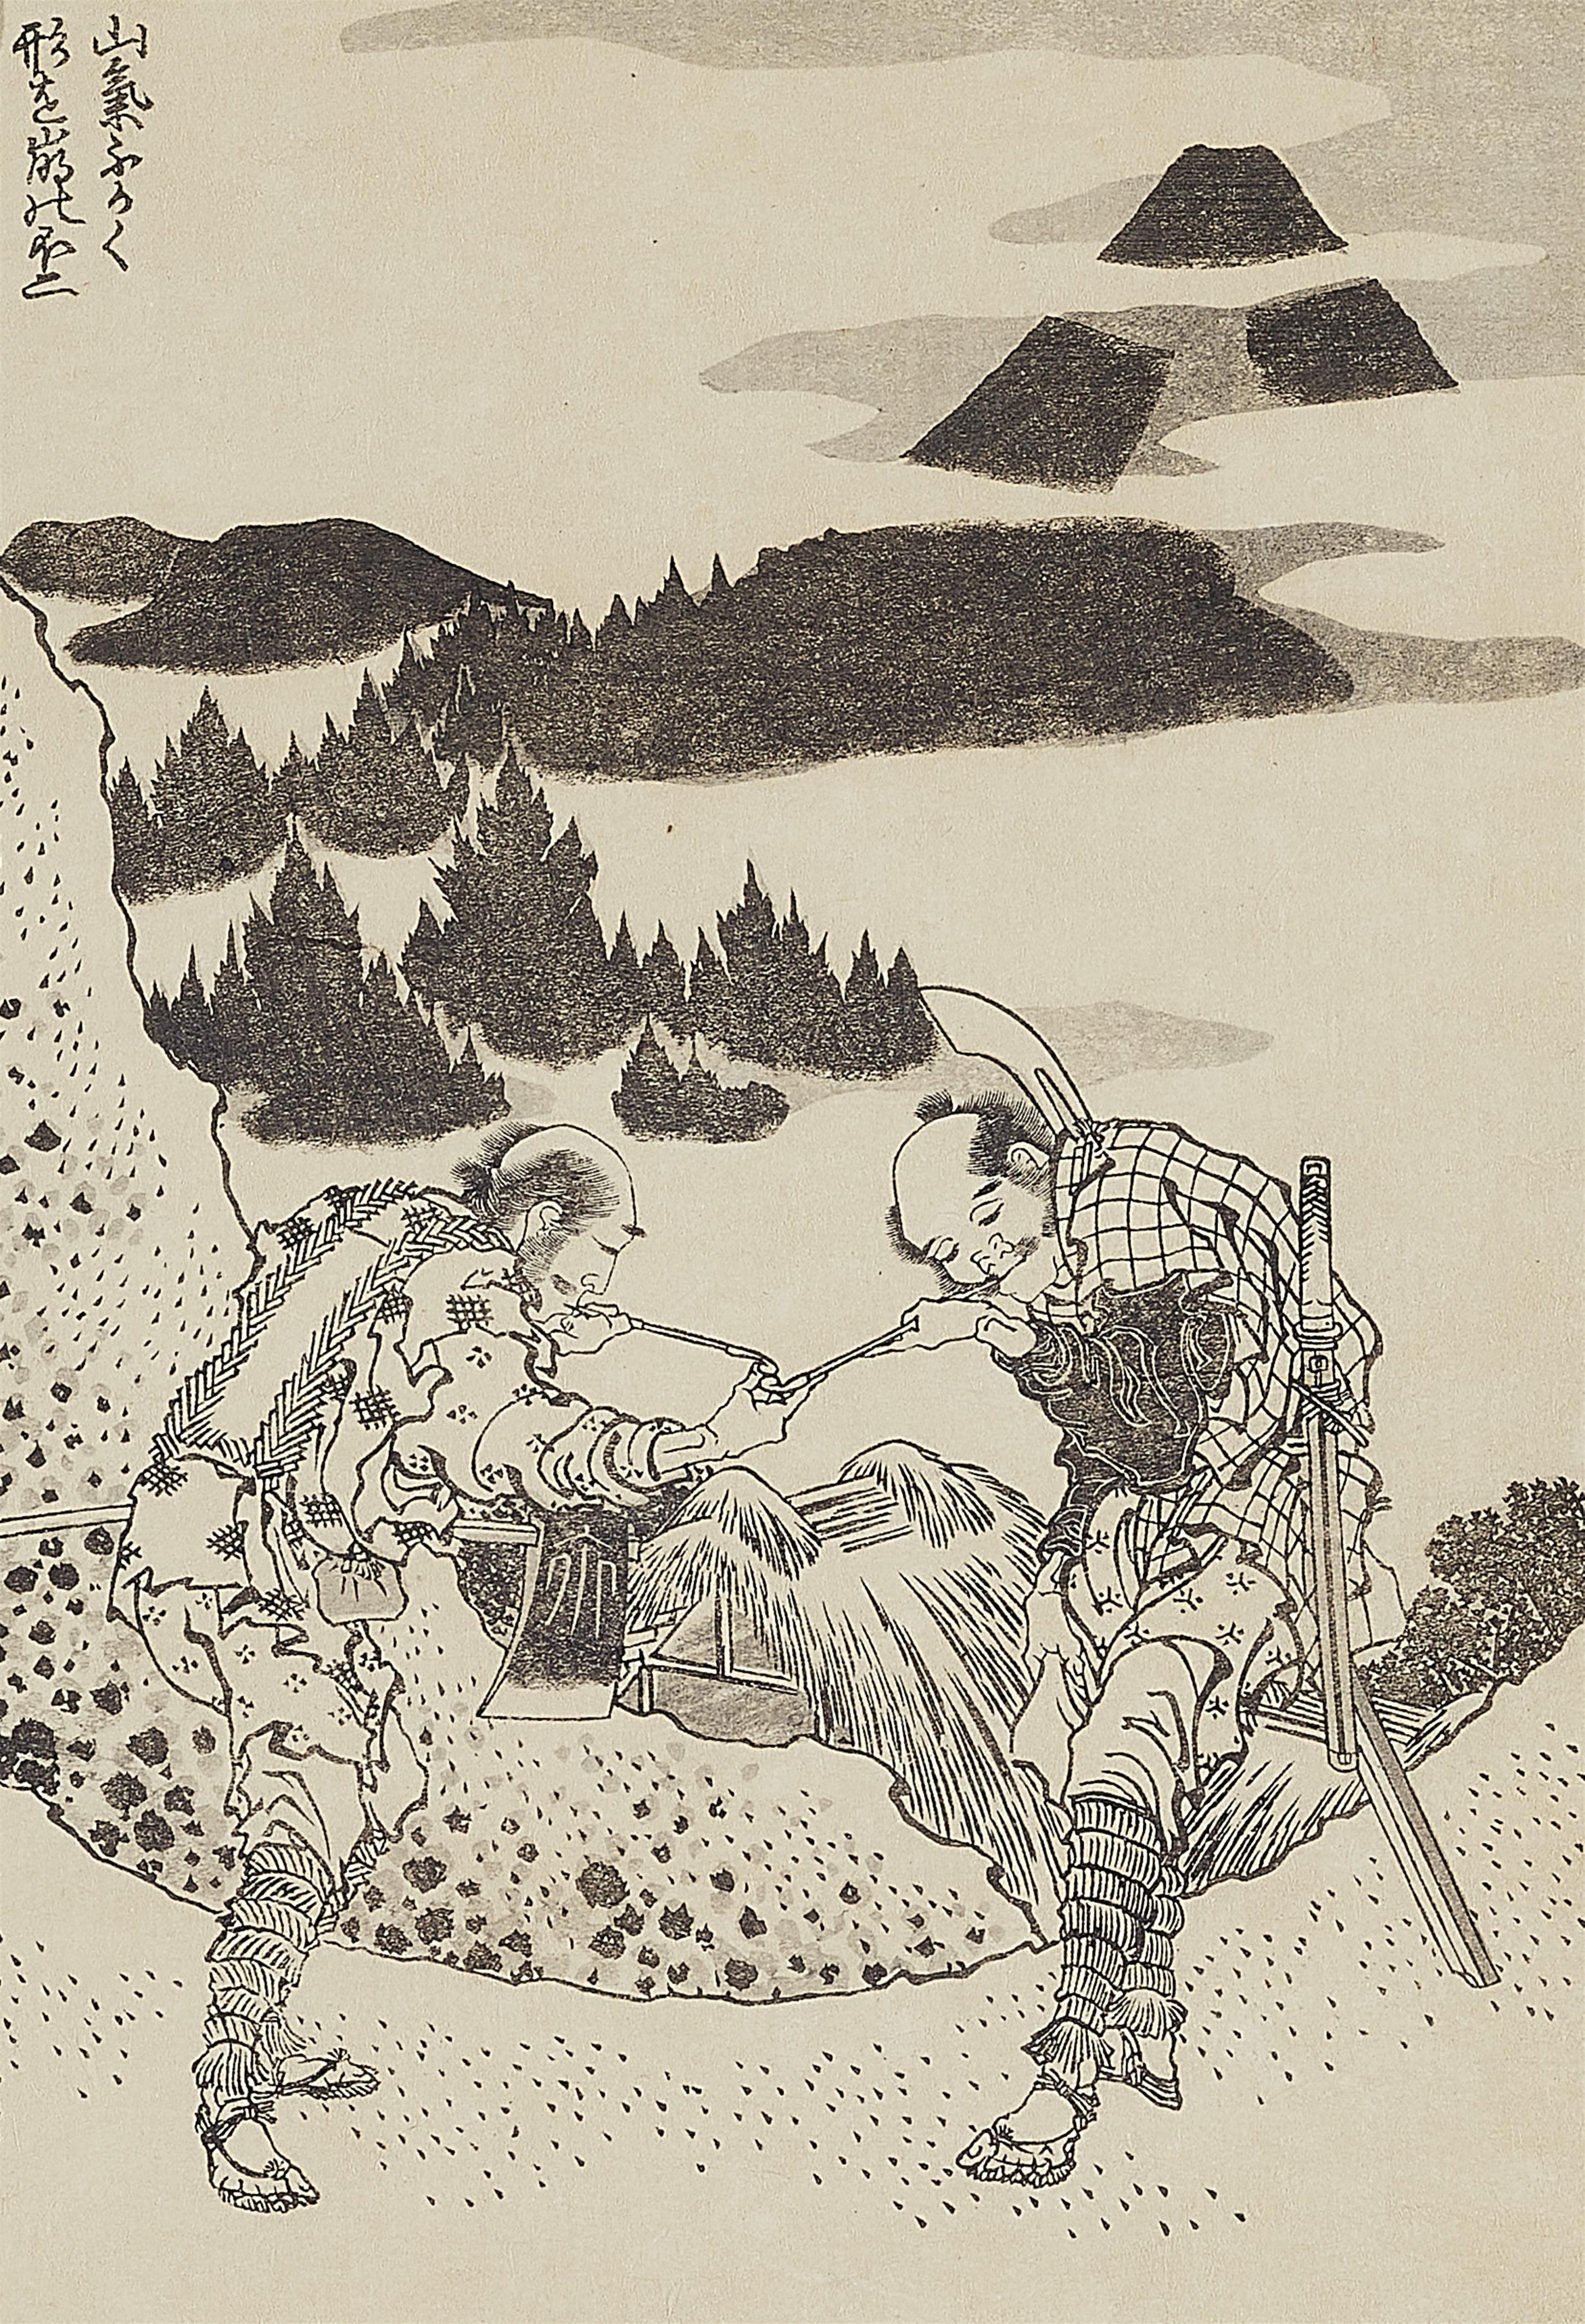 Katsushika Hokusai - Black and white illustrations from the album Fugaku hyakkei - image-37